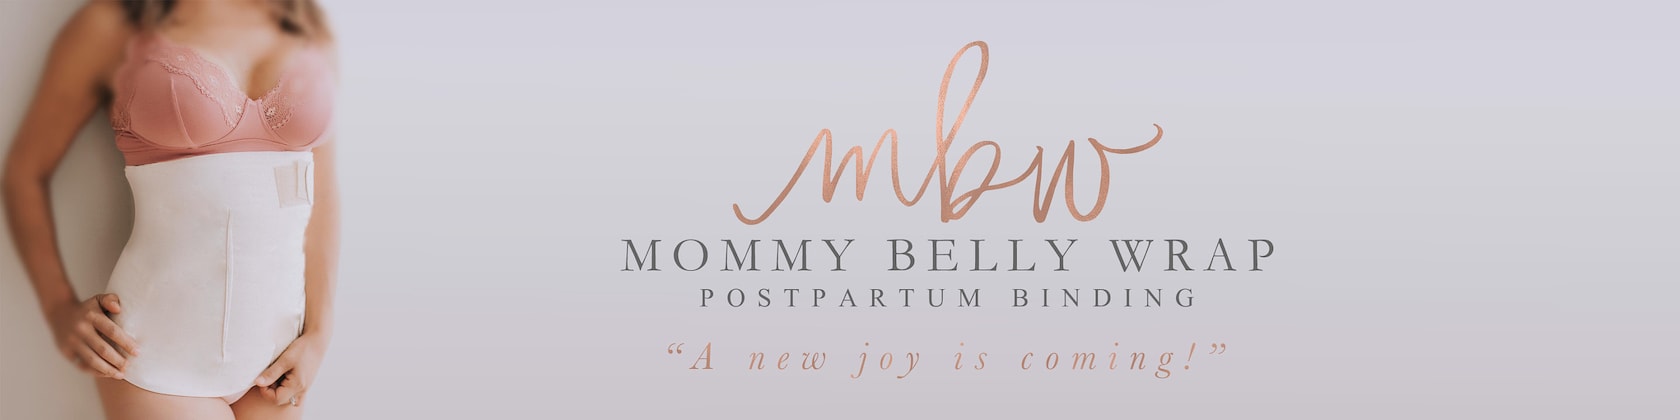 Postpartum Belly Wrap 100% Natural Cotton Muslin faja De Manta